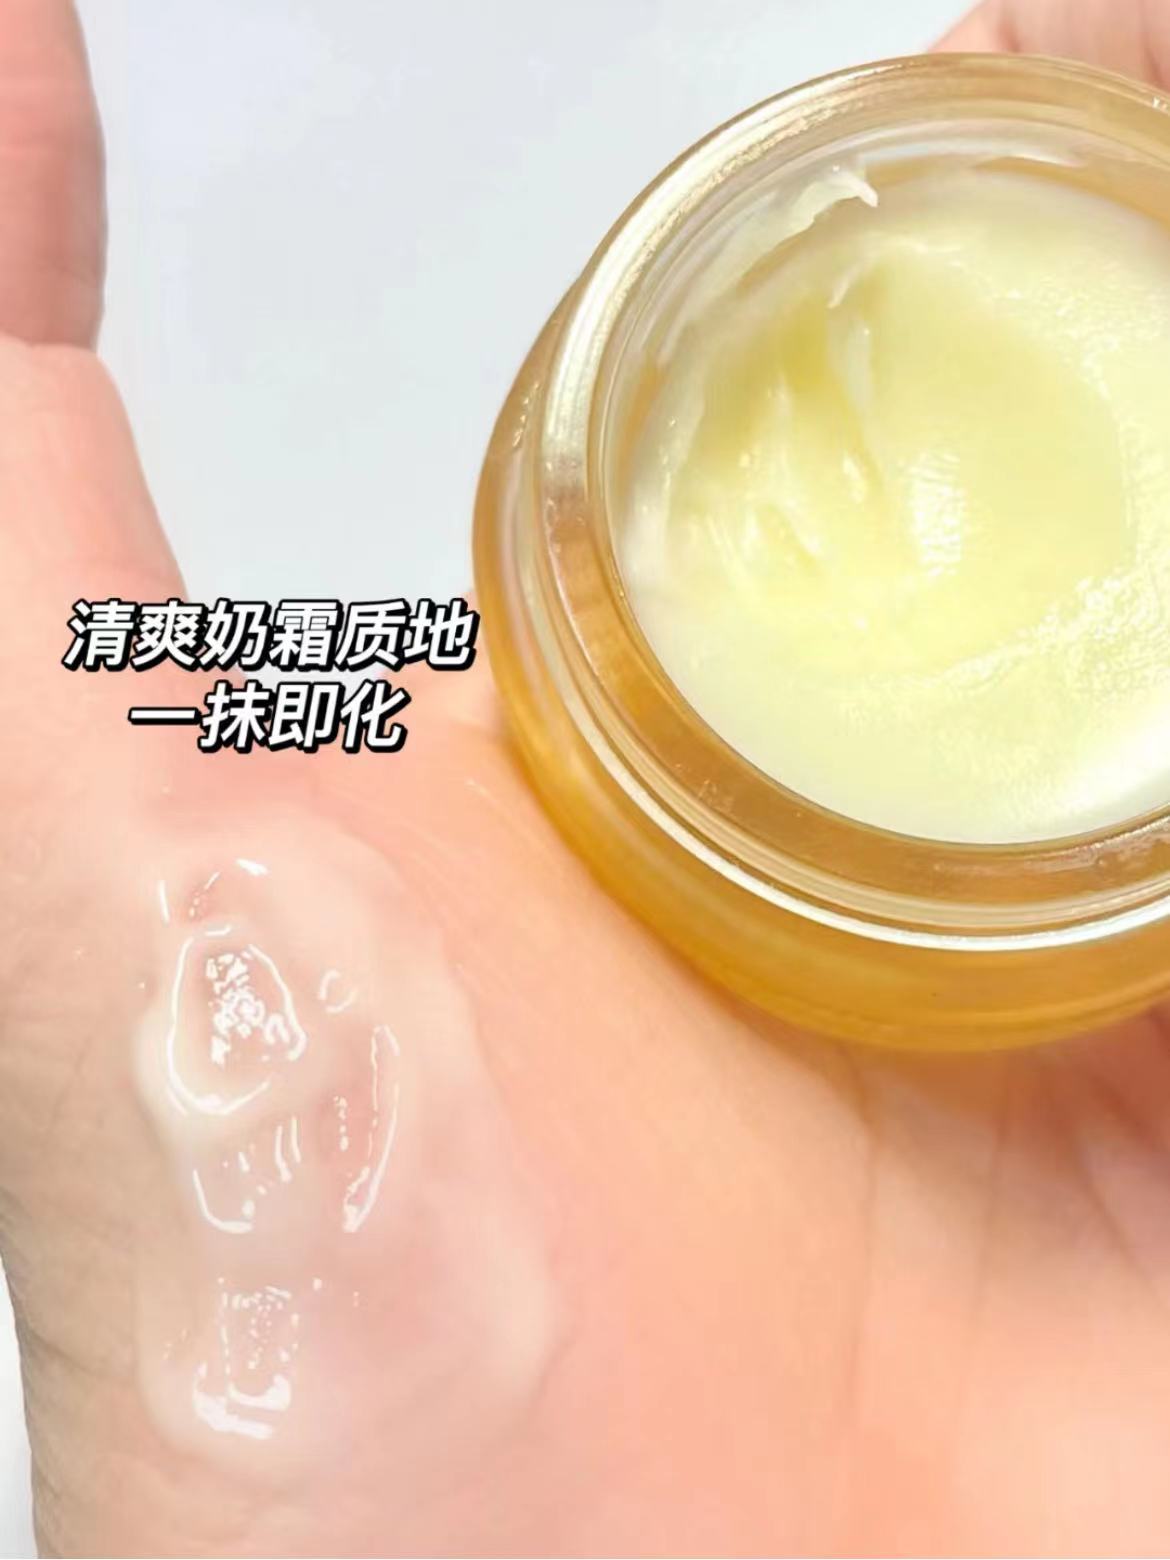 RNW Moisturizing Lip Cream Lip Mask/Balm 10g 如薇柔润倍护奶霜唇膜